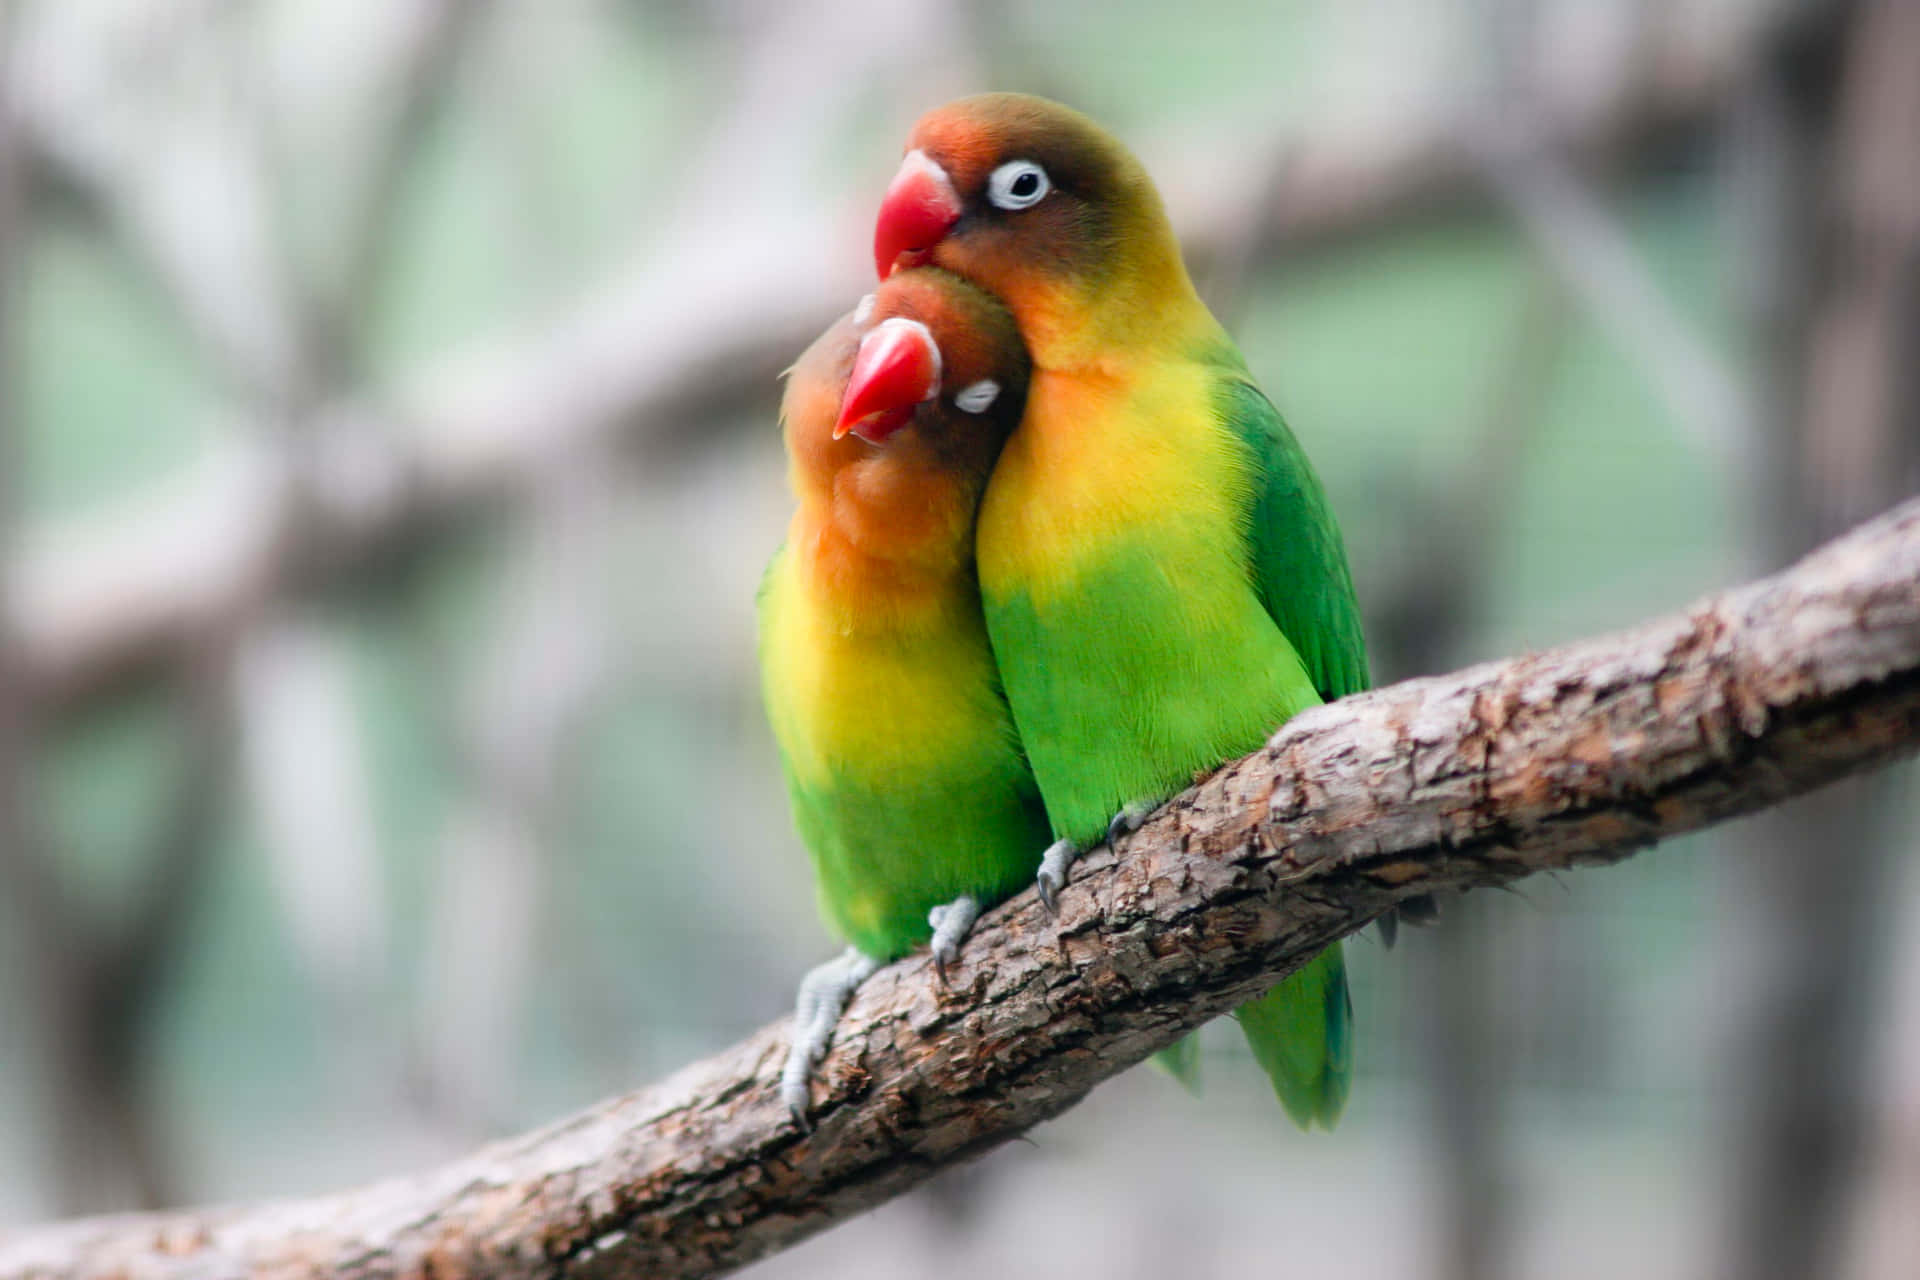 A Loving Moment Between Love Birds